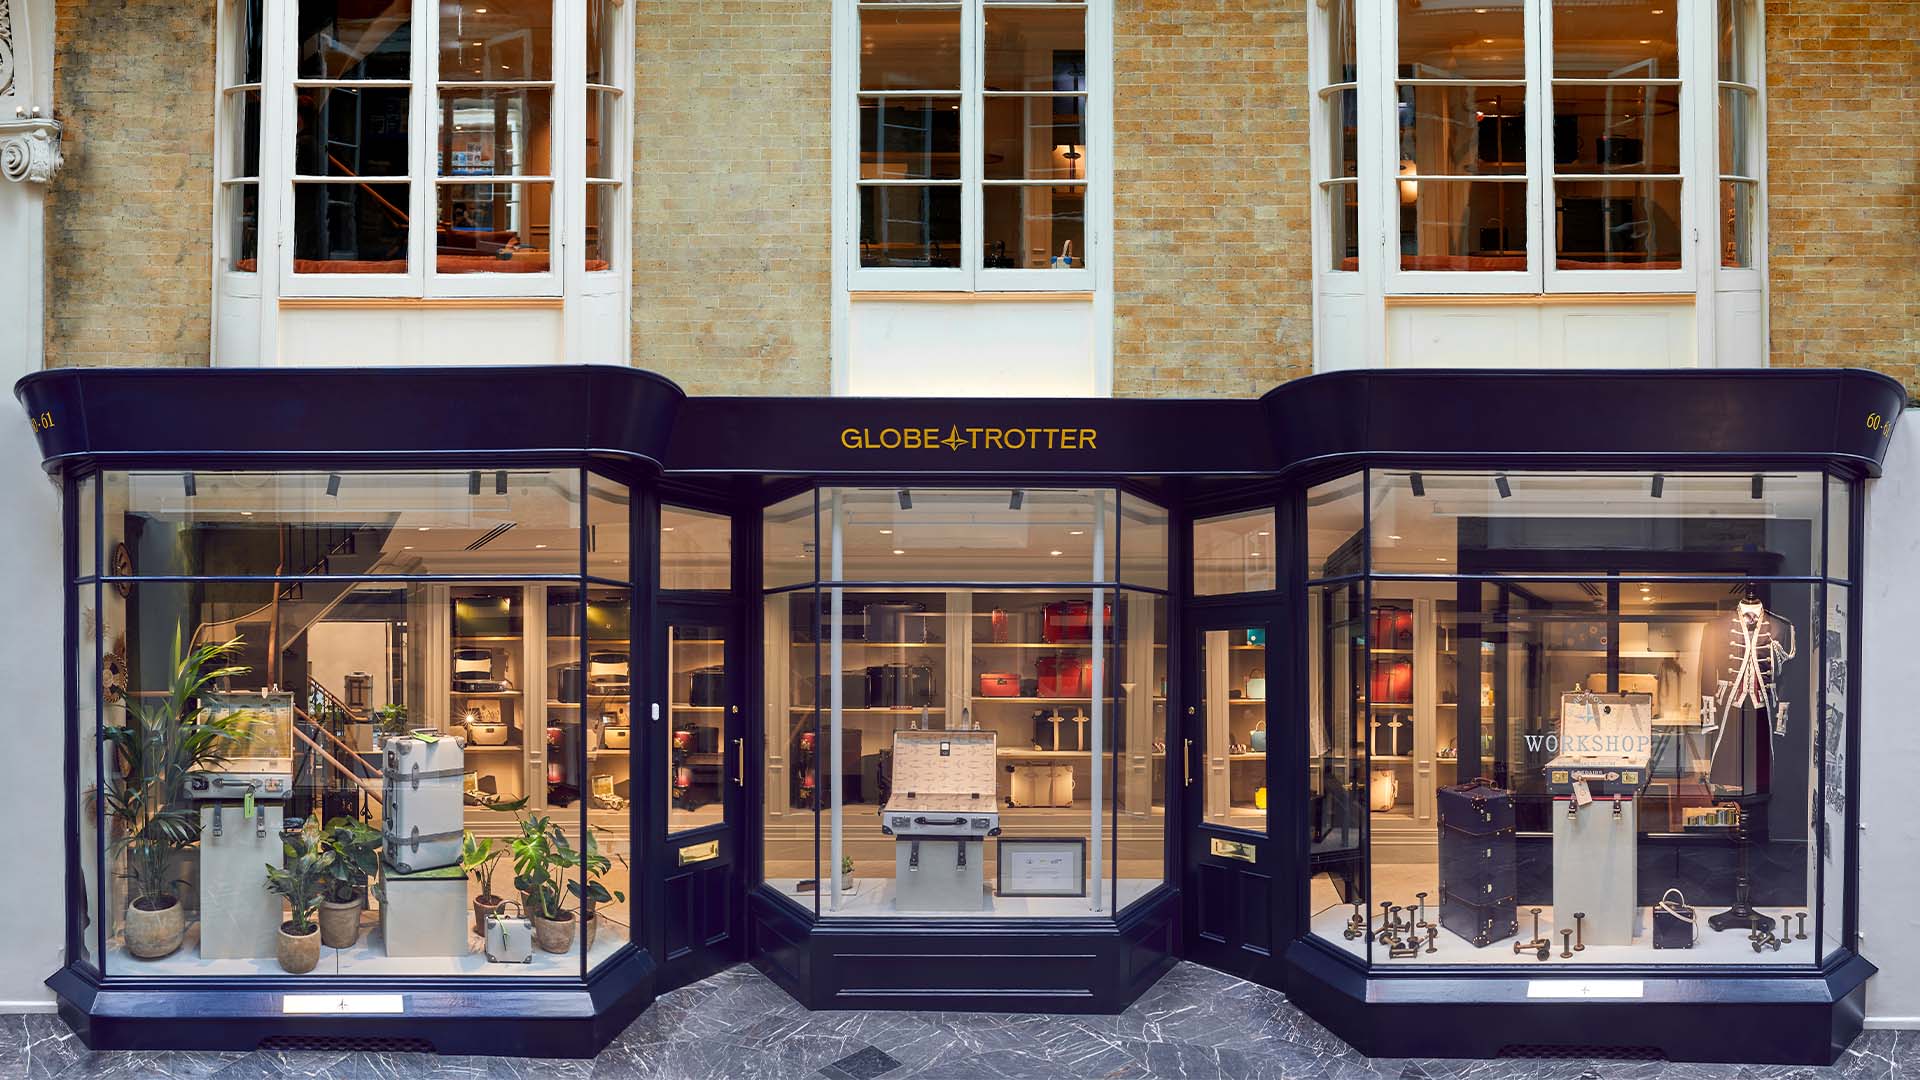 Globe-Trotter London Flagship, Store